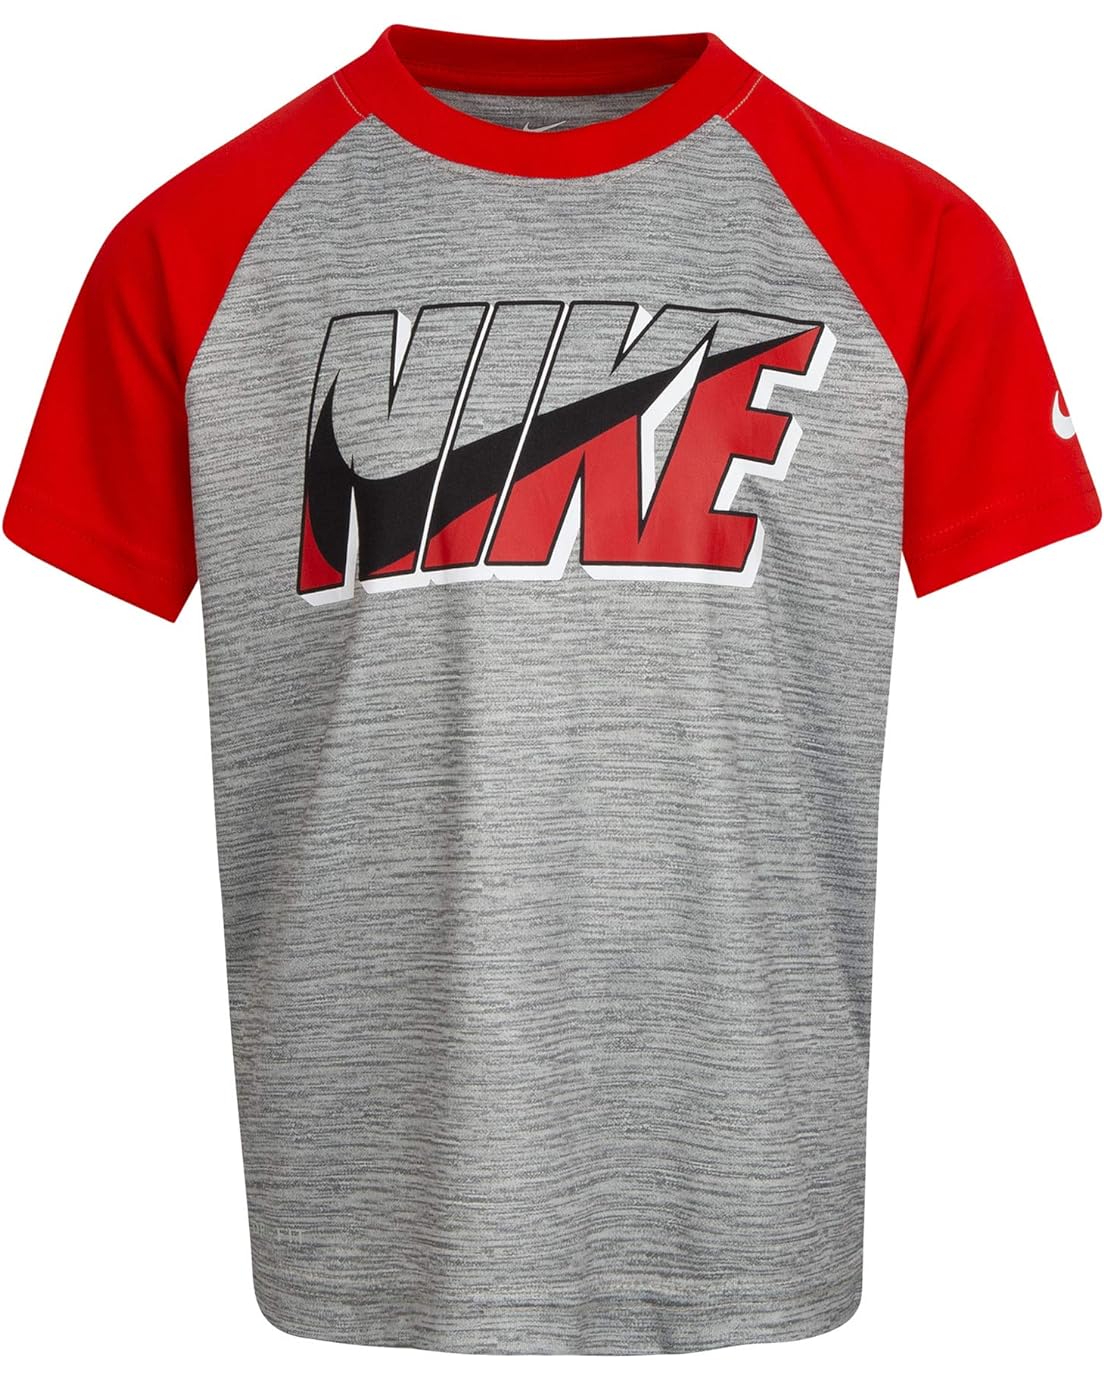 Nike Kids Raglan Graphic T-Shirt (Little Kids)